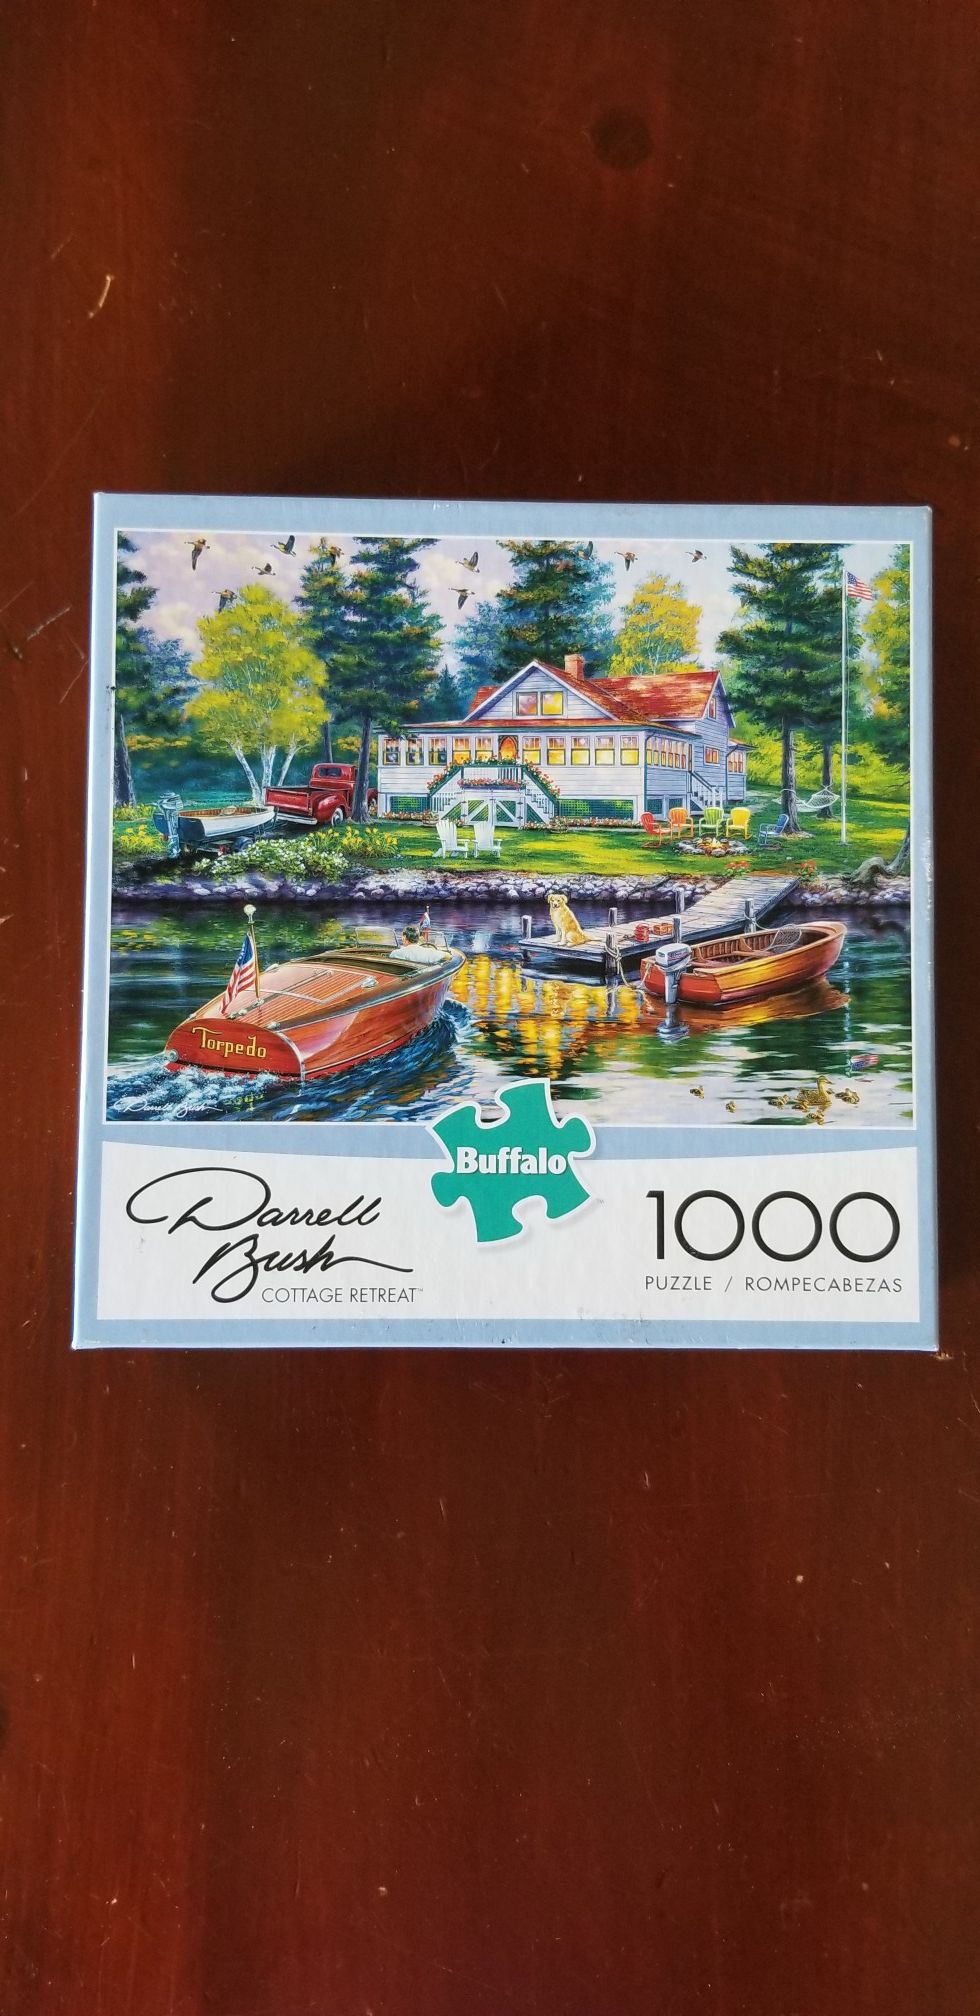 Buffalo Games Darrell Bush Cottage Retreat 1000 piece puzzle